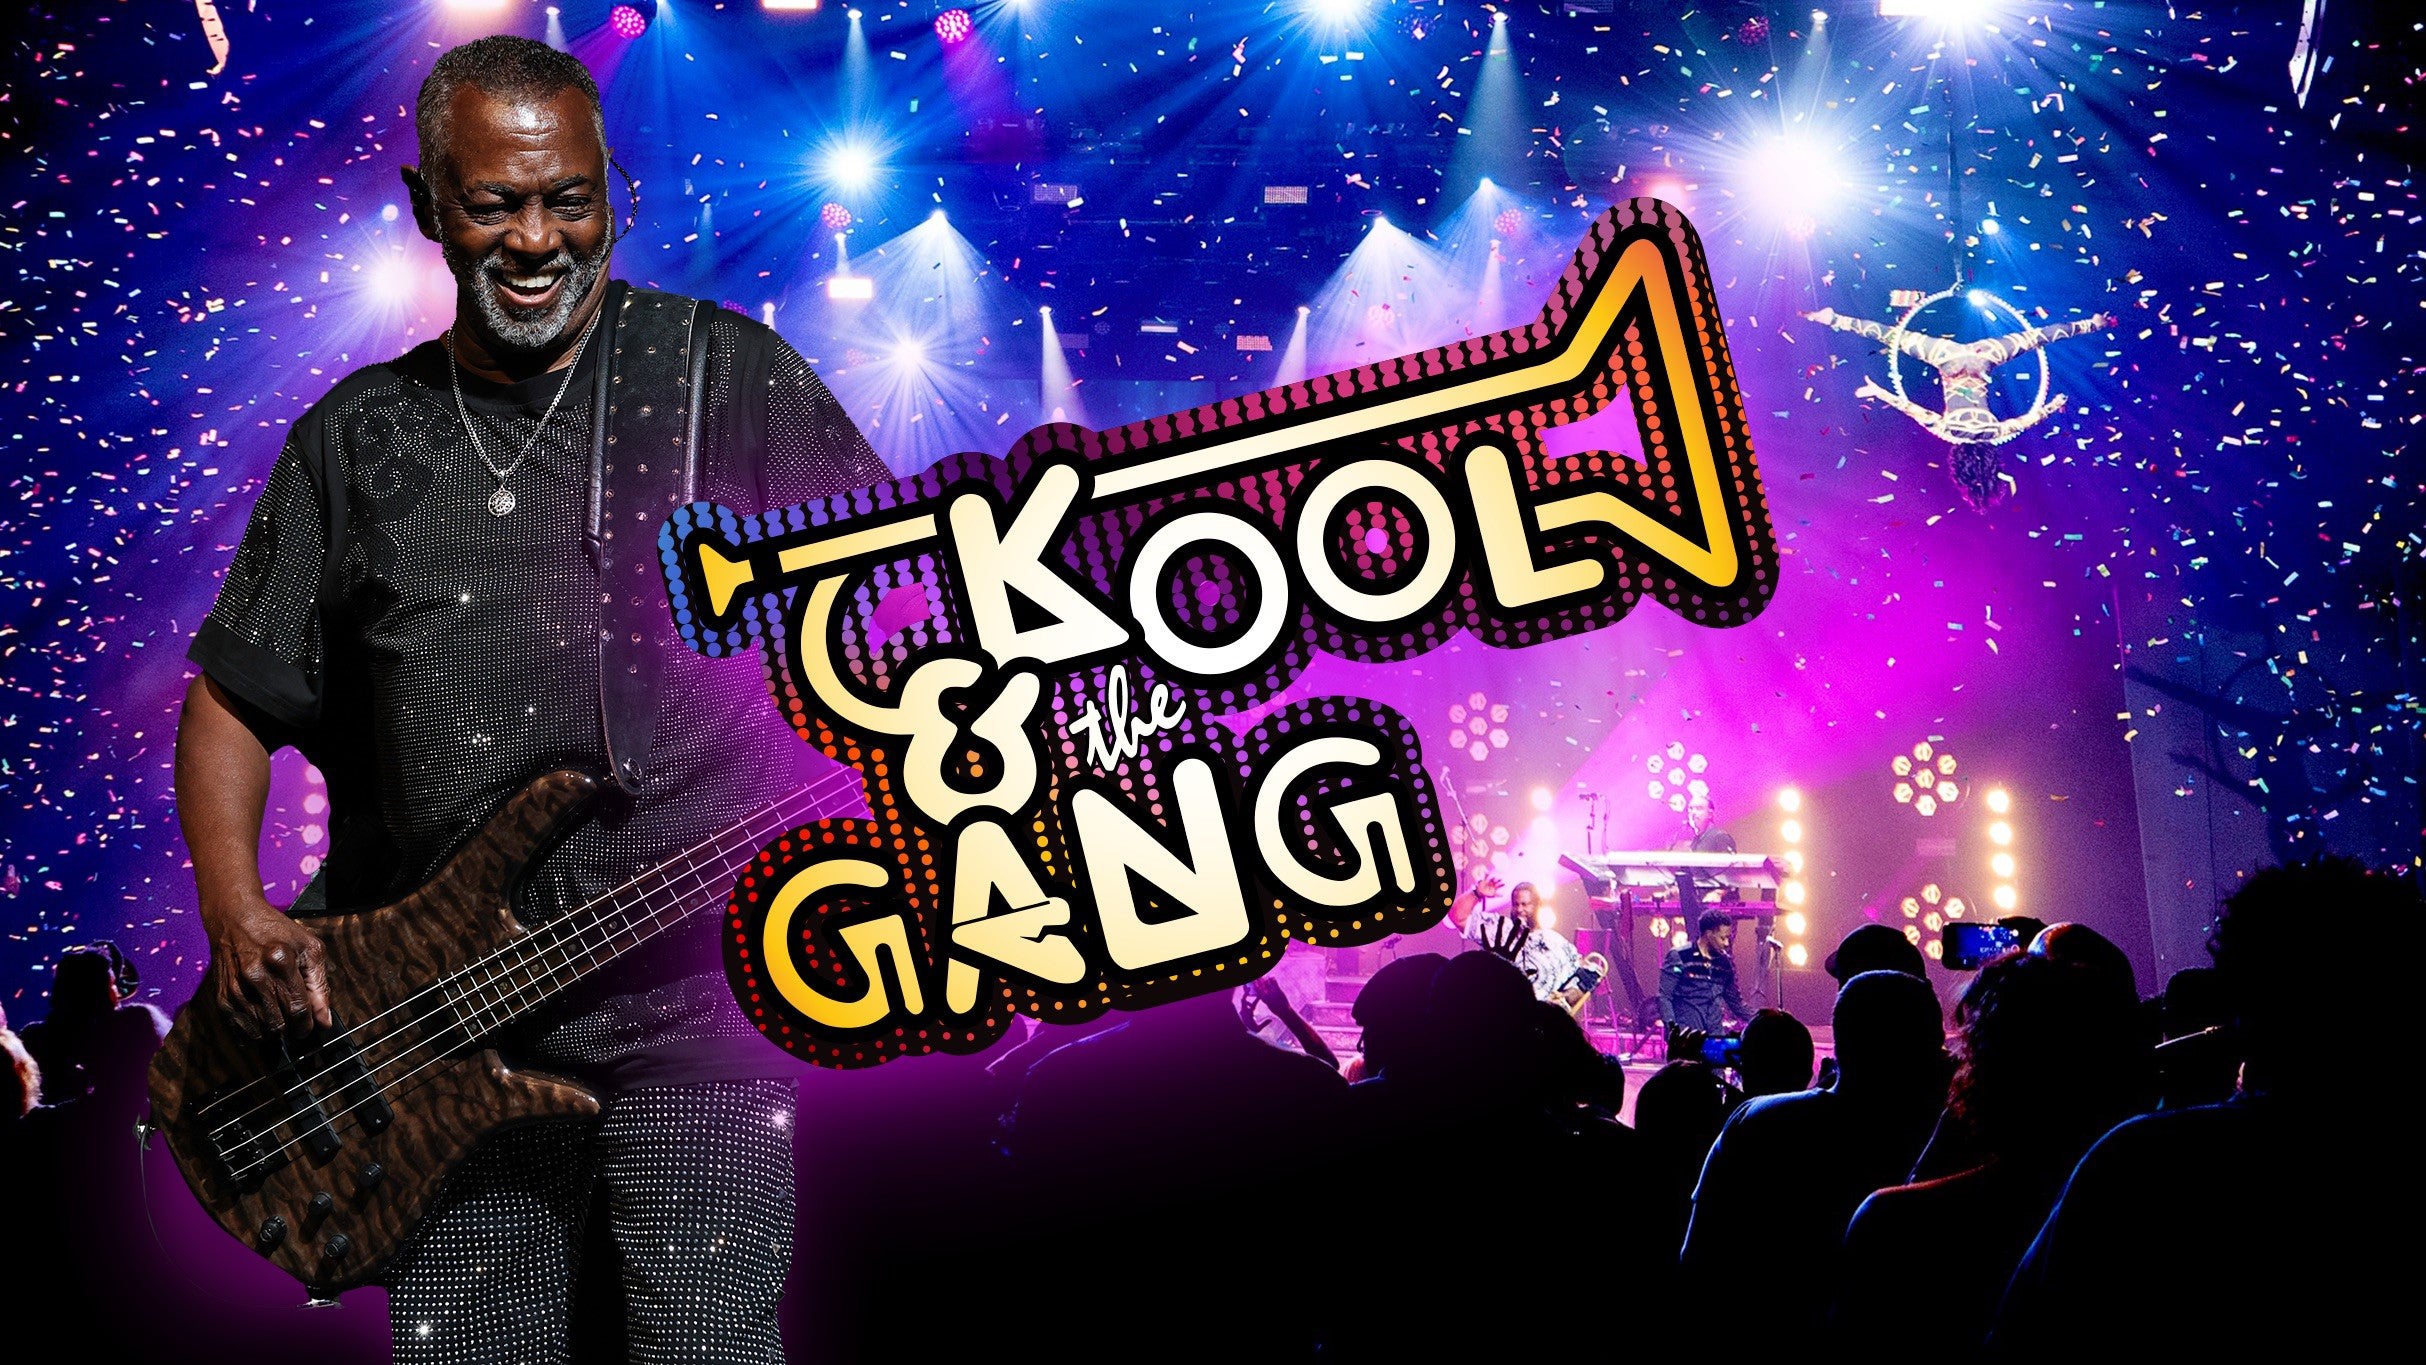 Kool & the Gang in Las Vegas promo photo for Official Platinum presale offer code